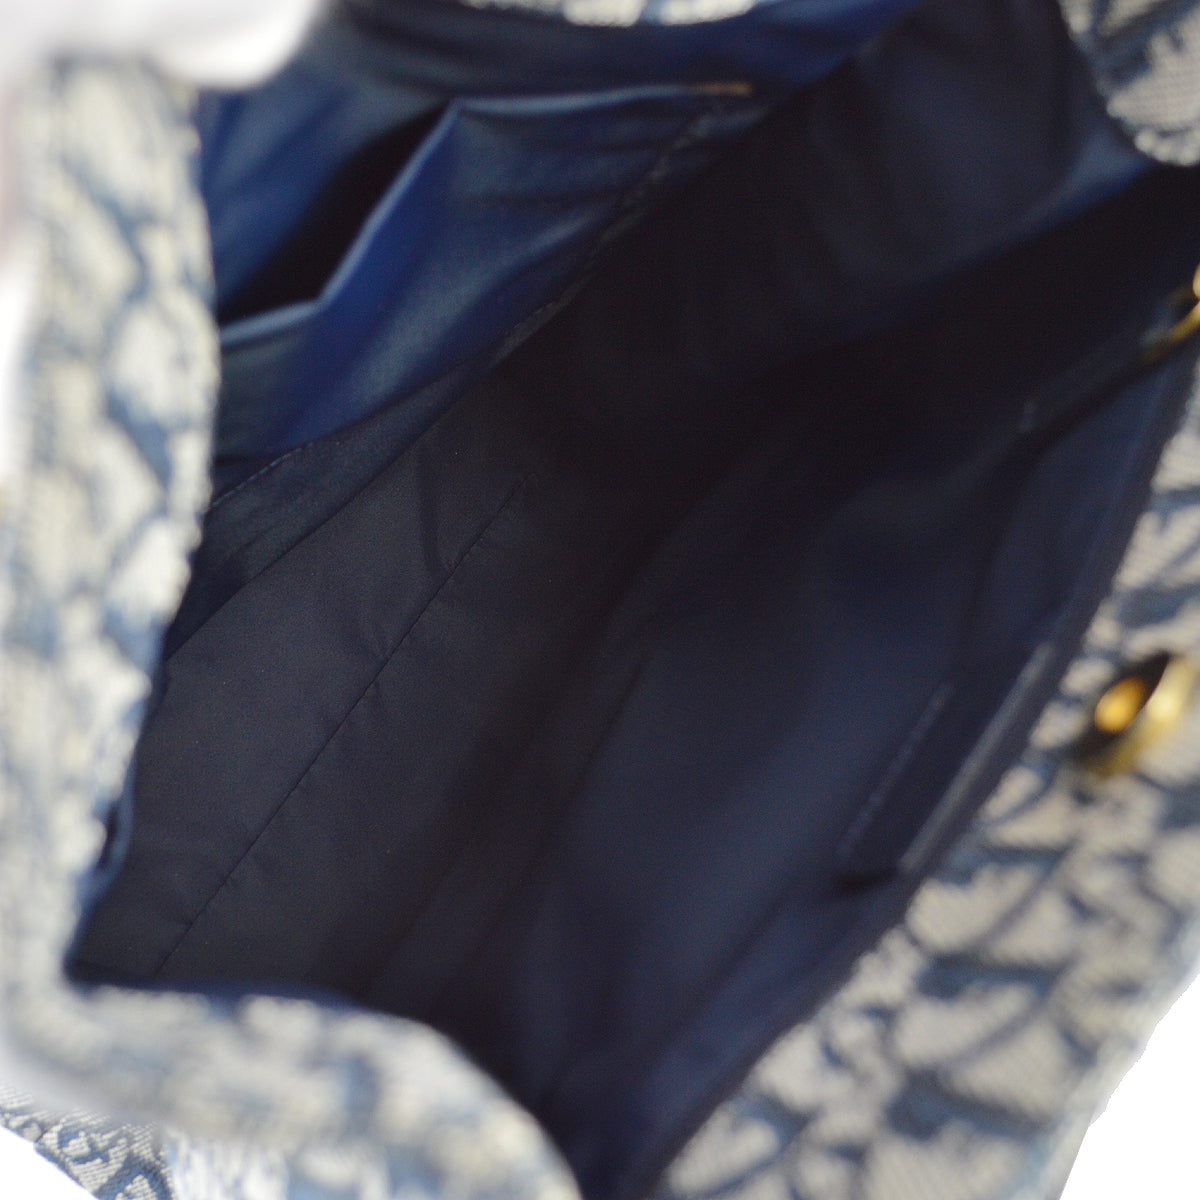 Christian Dior 2003 Navy Trotter Tote Handbag